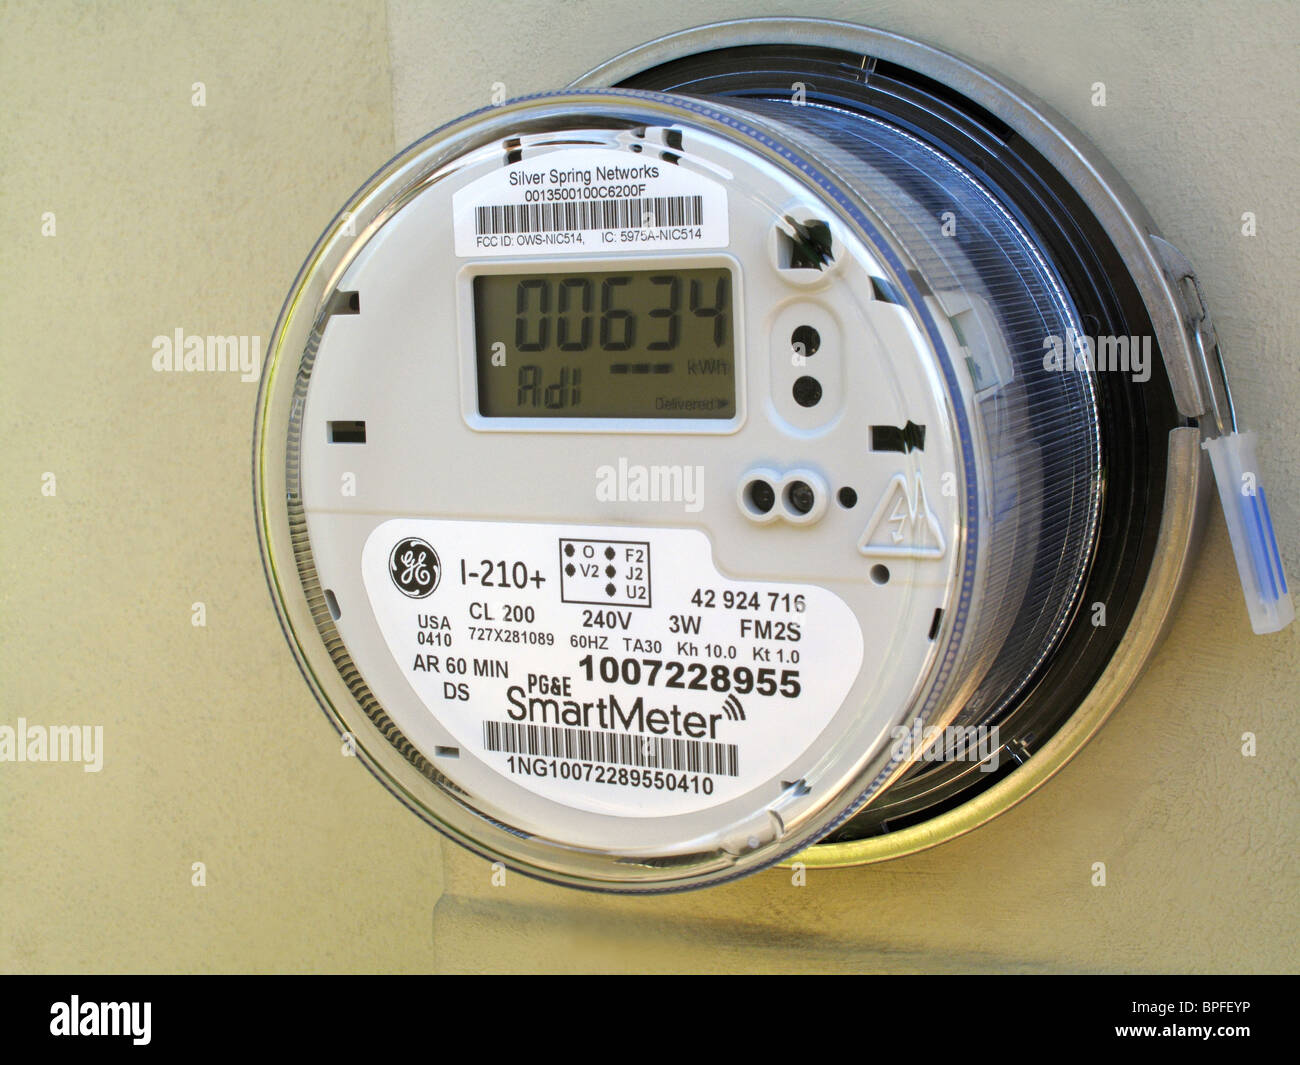 PG&E SmartMeter residential electric meter Stock Photo